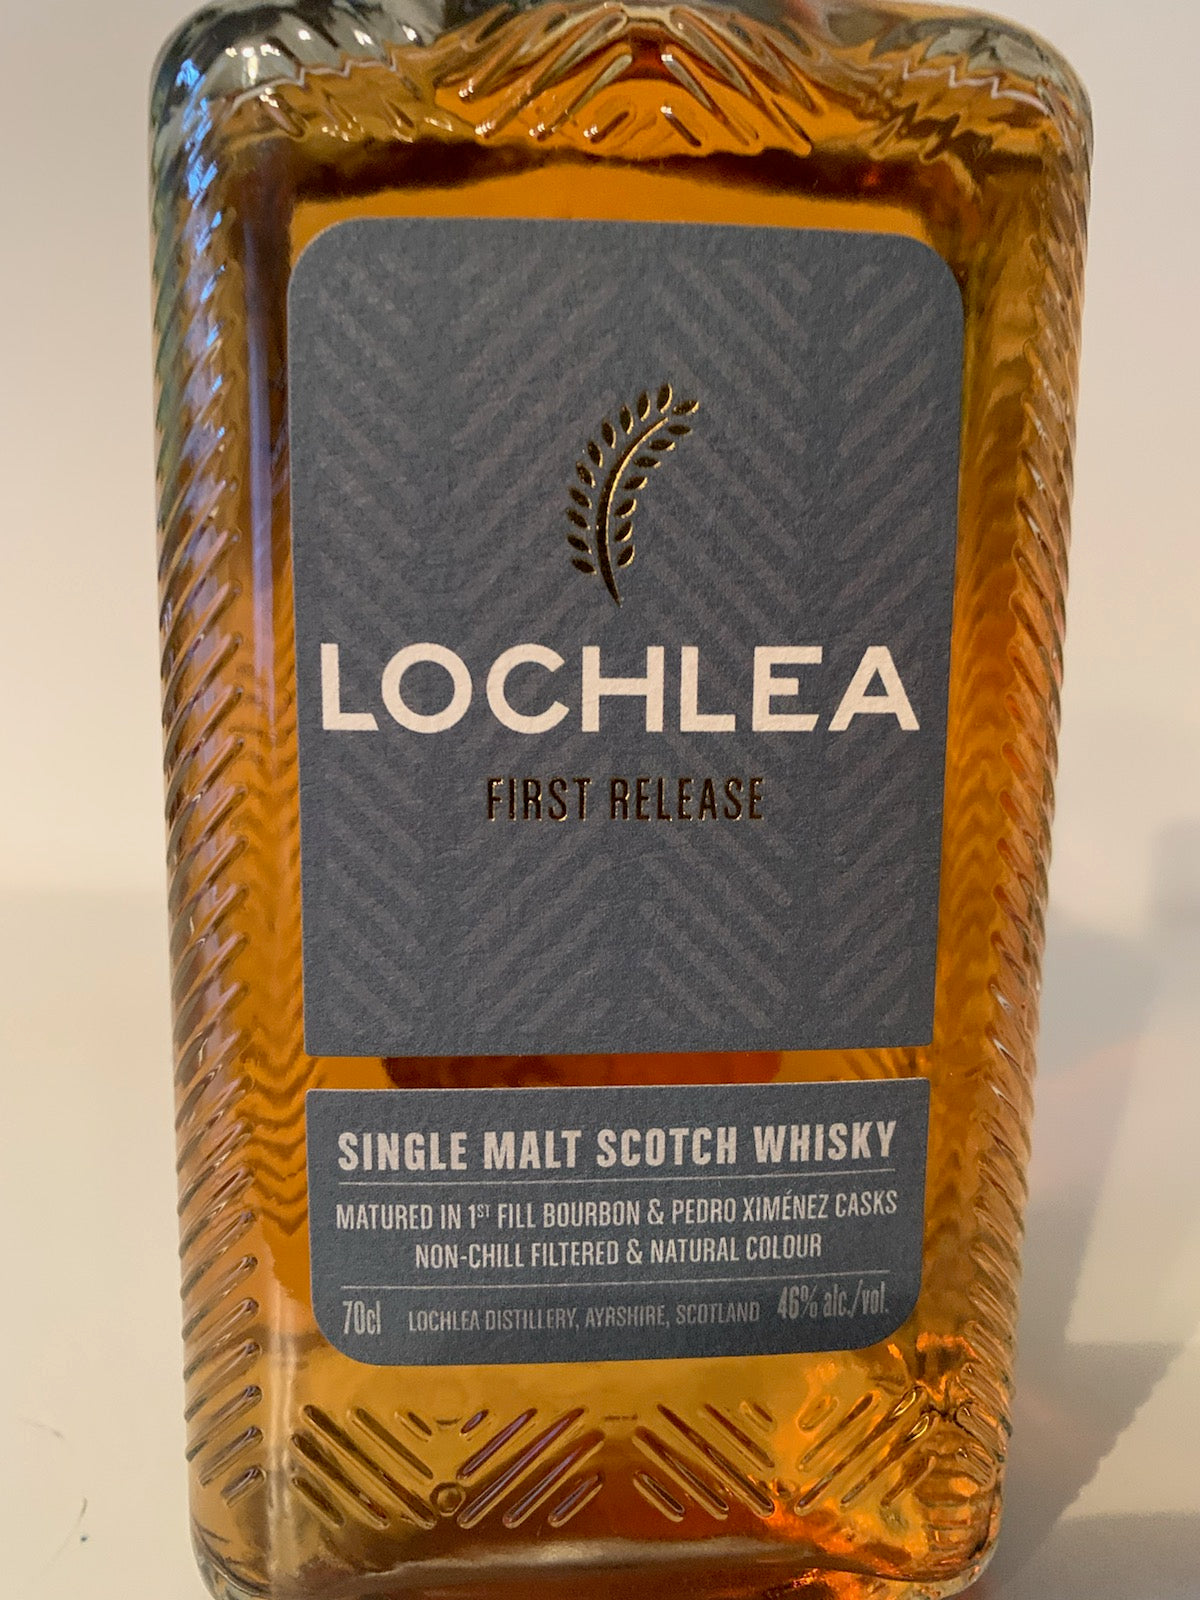 Lochlea Single Malt Scotch Whisky 1st Release 46% / 70 CL.